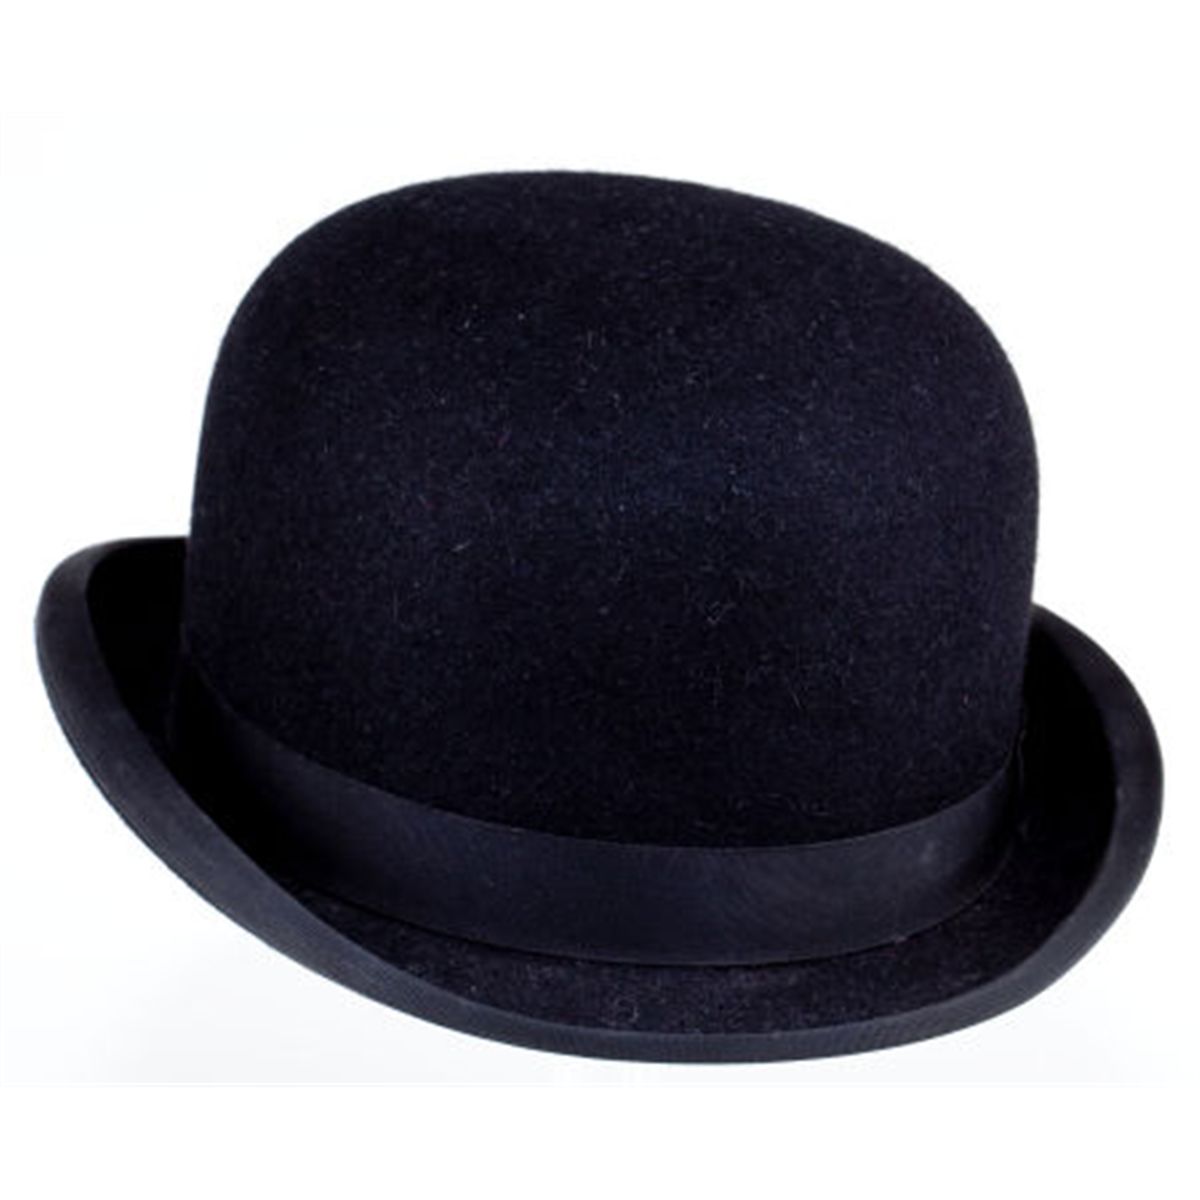 Bowler hat Clip art - Black h